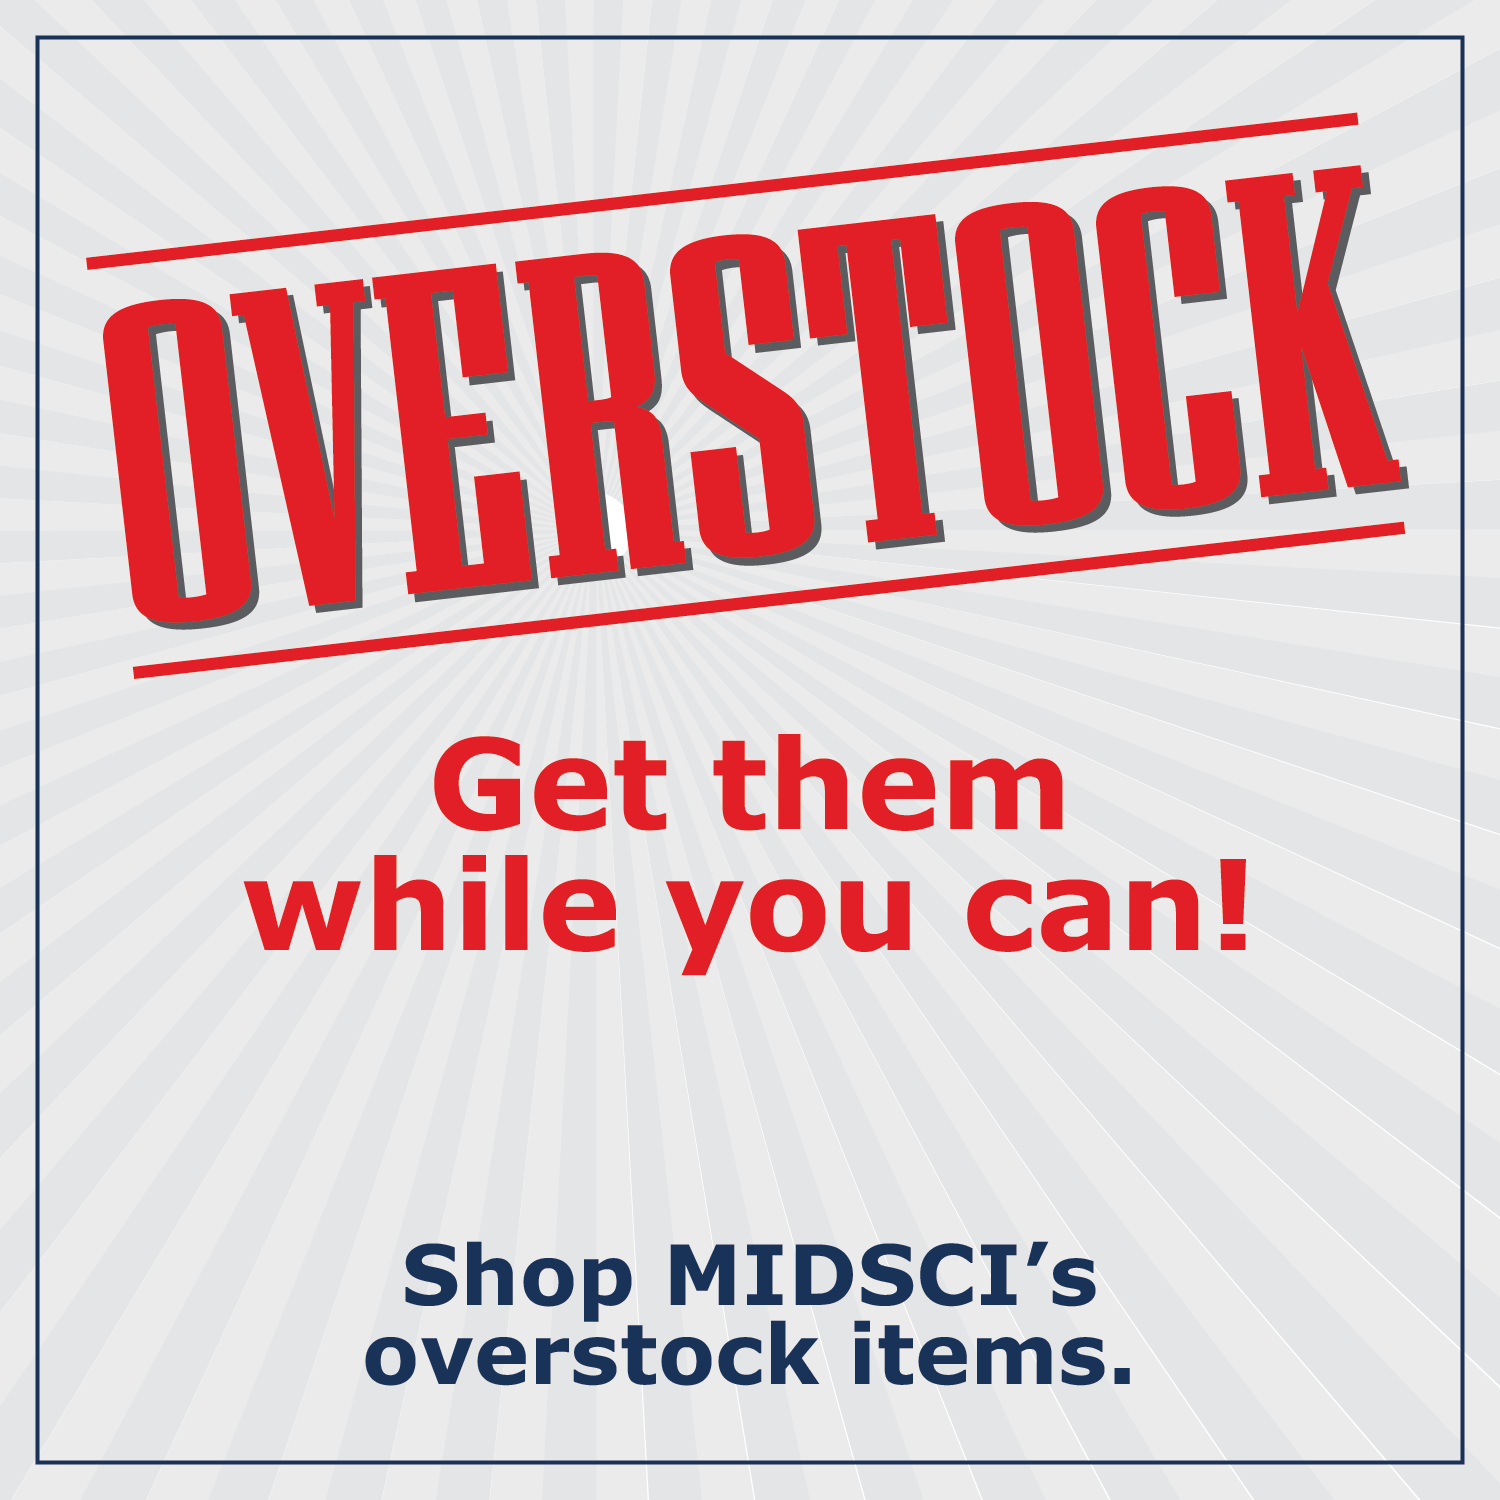 Overstock items